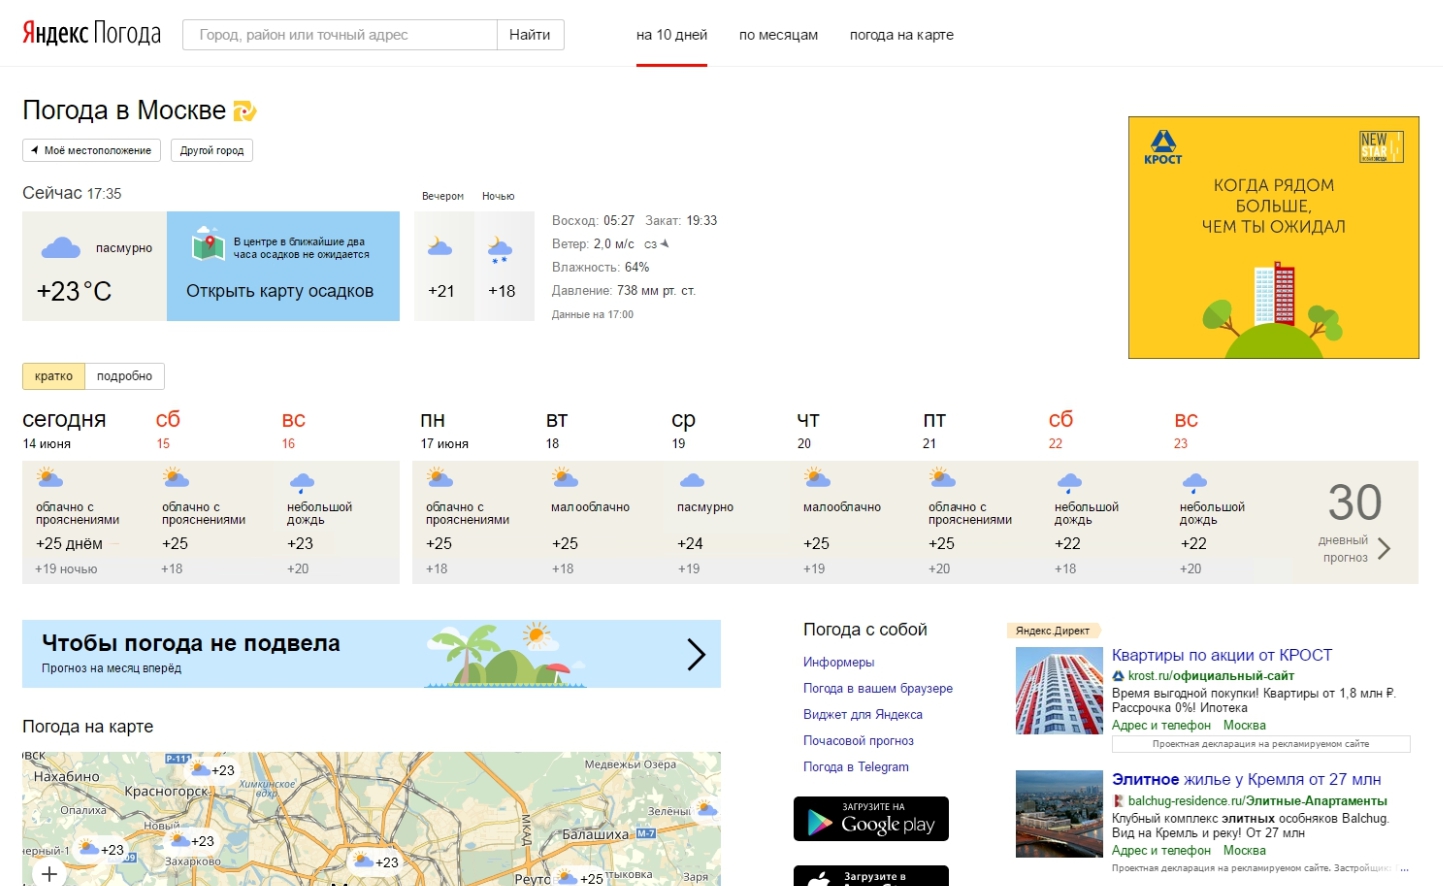 Погода г. Яндекс погода Салават. Яндекс погода в рассвете. Москва Красногорск погода. Погода Нахабино карта осадков.